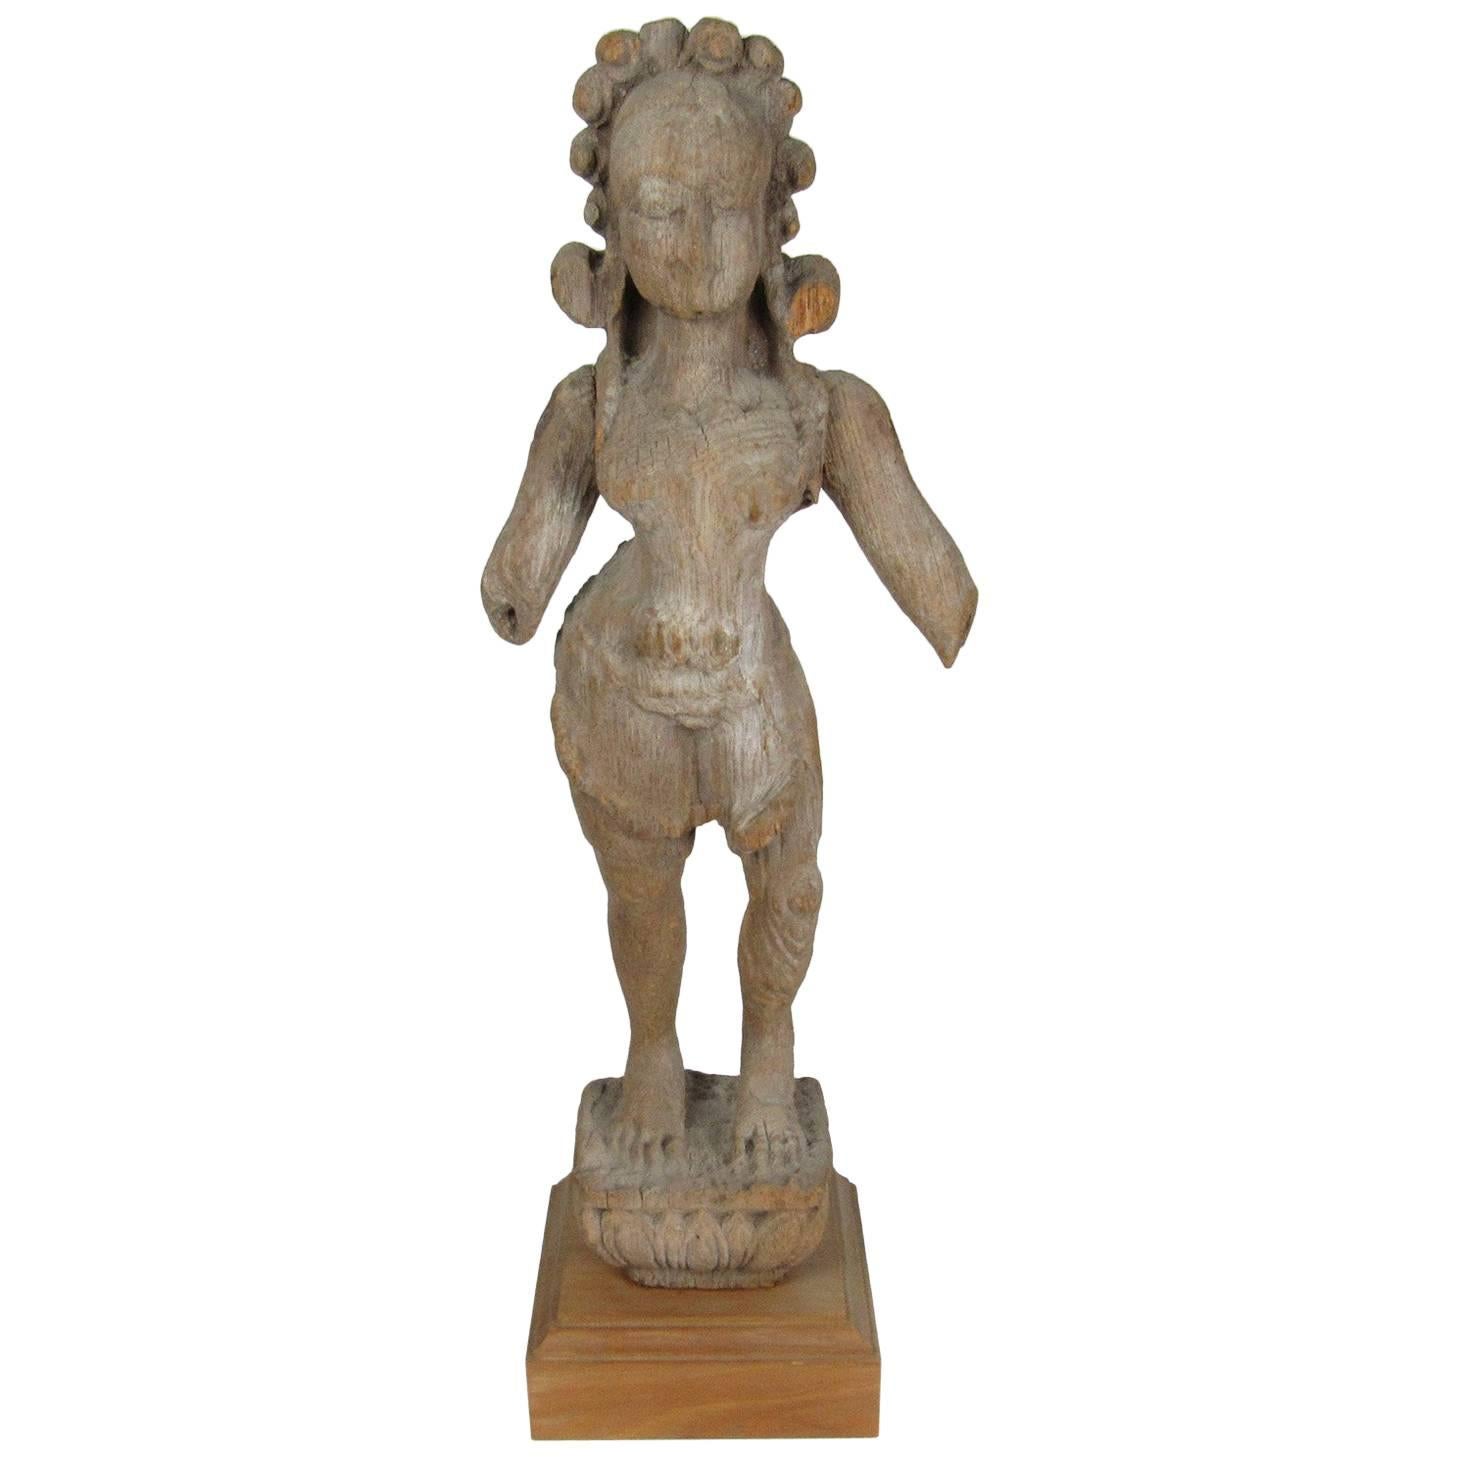 17th-18th Century Carved Wood Figure of a Female Hindu Deity